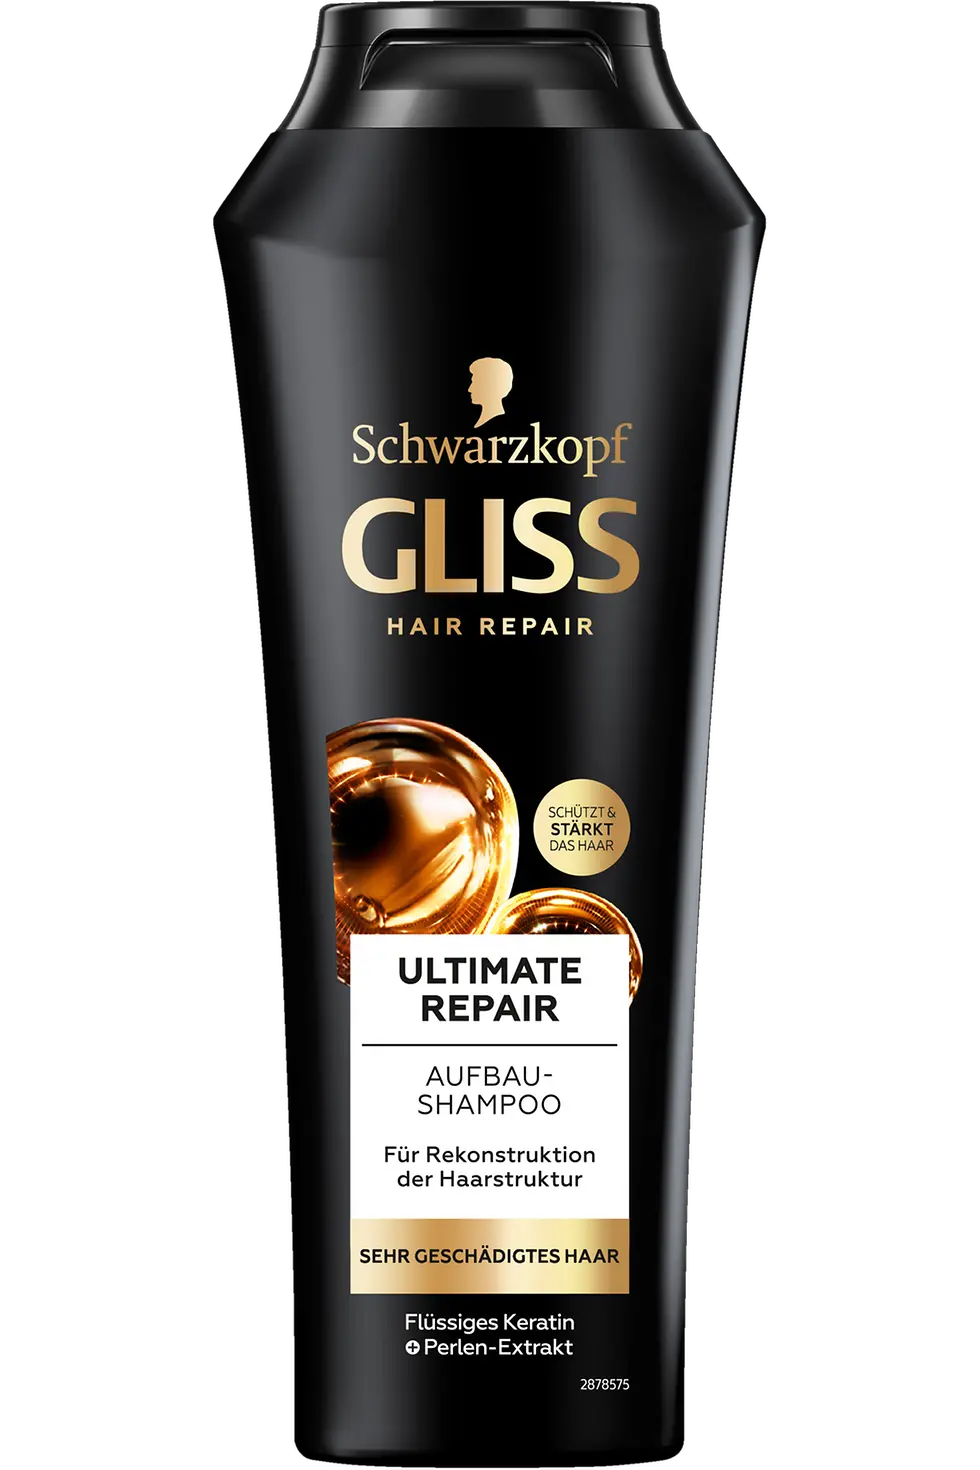 
Gliss Shampoo Ultimate Repair